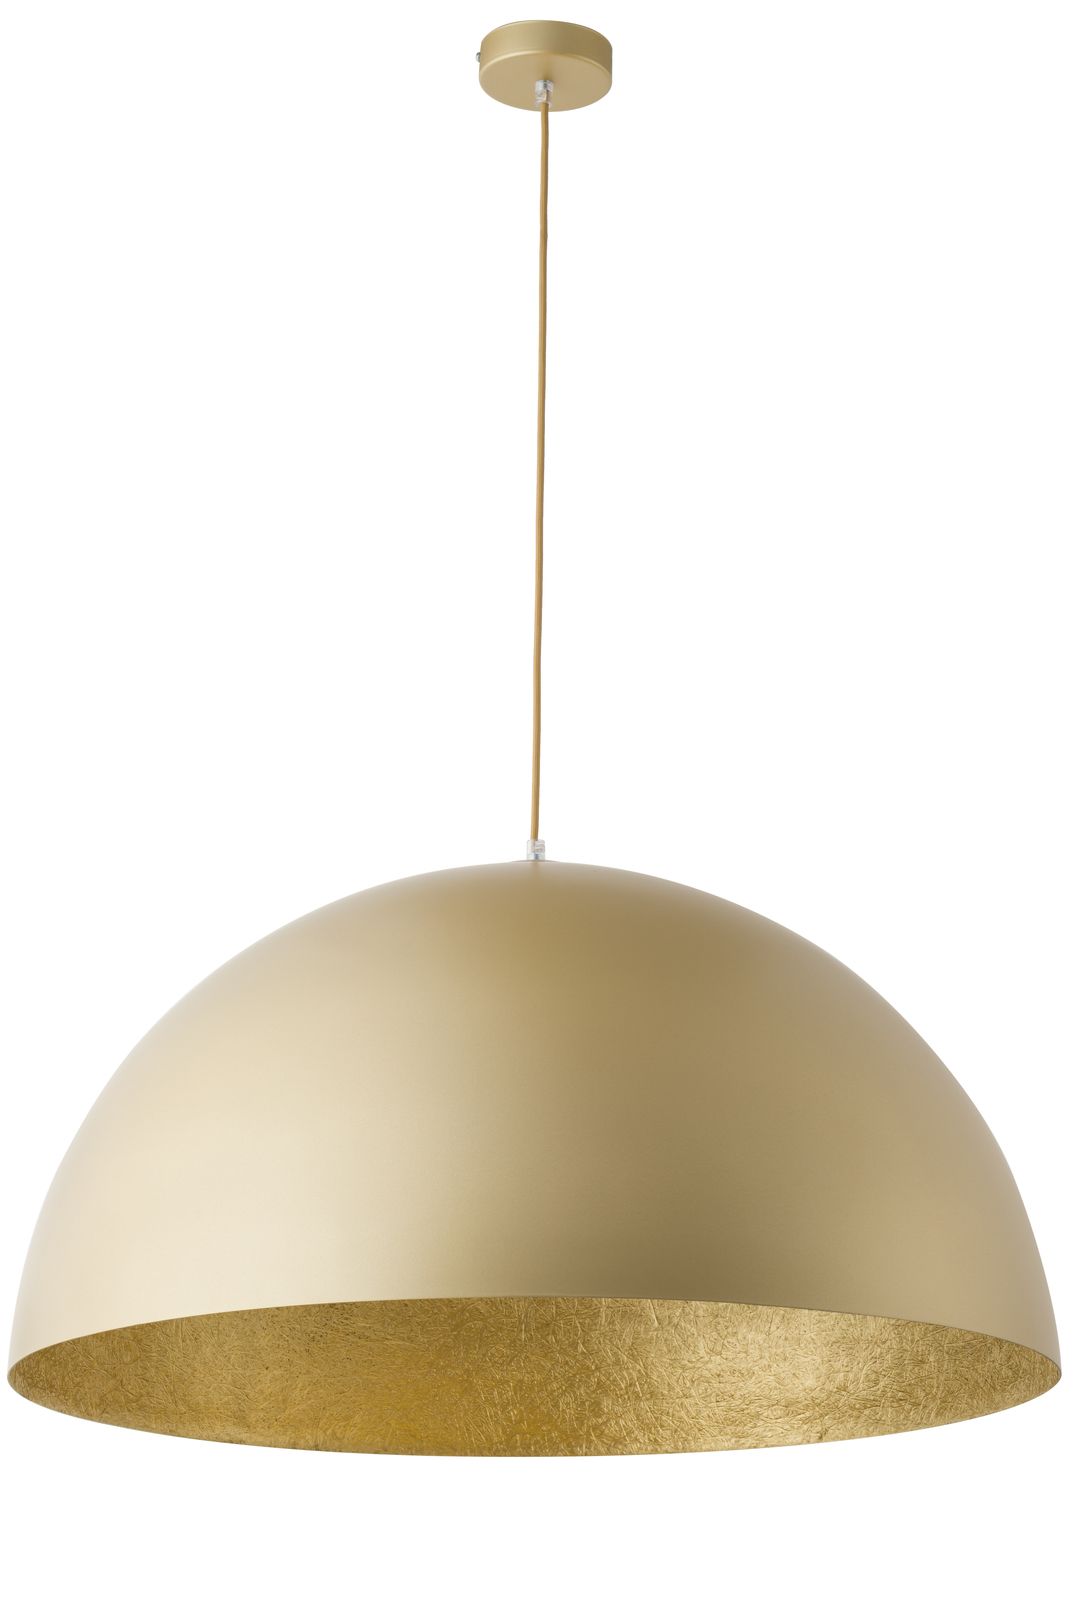 Goldene Hängelampe Metall Ø50 cm E27 bis 1 m hängend